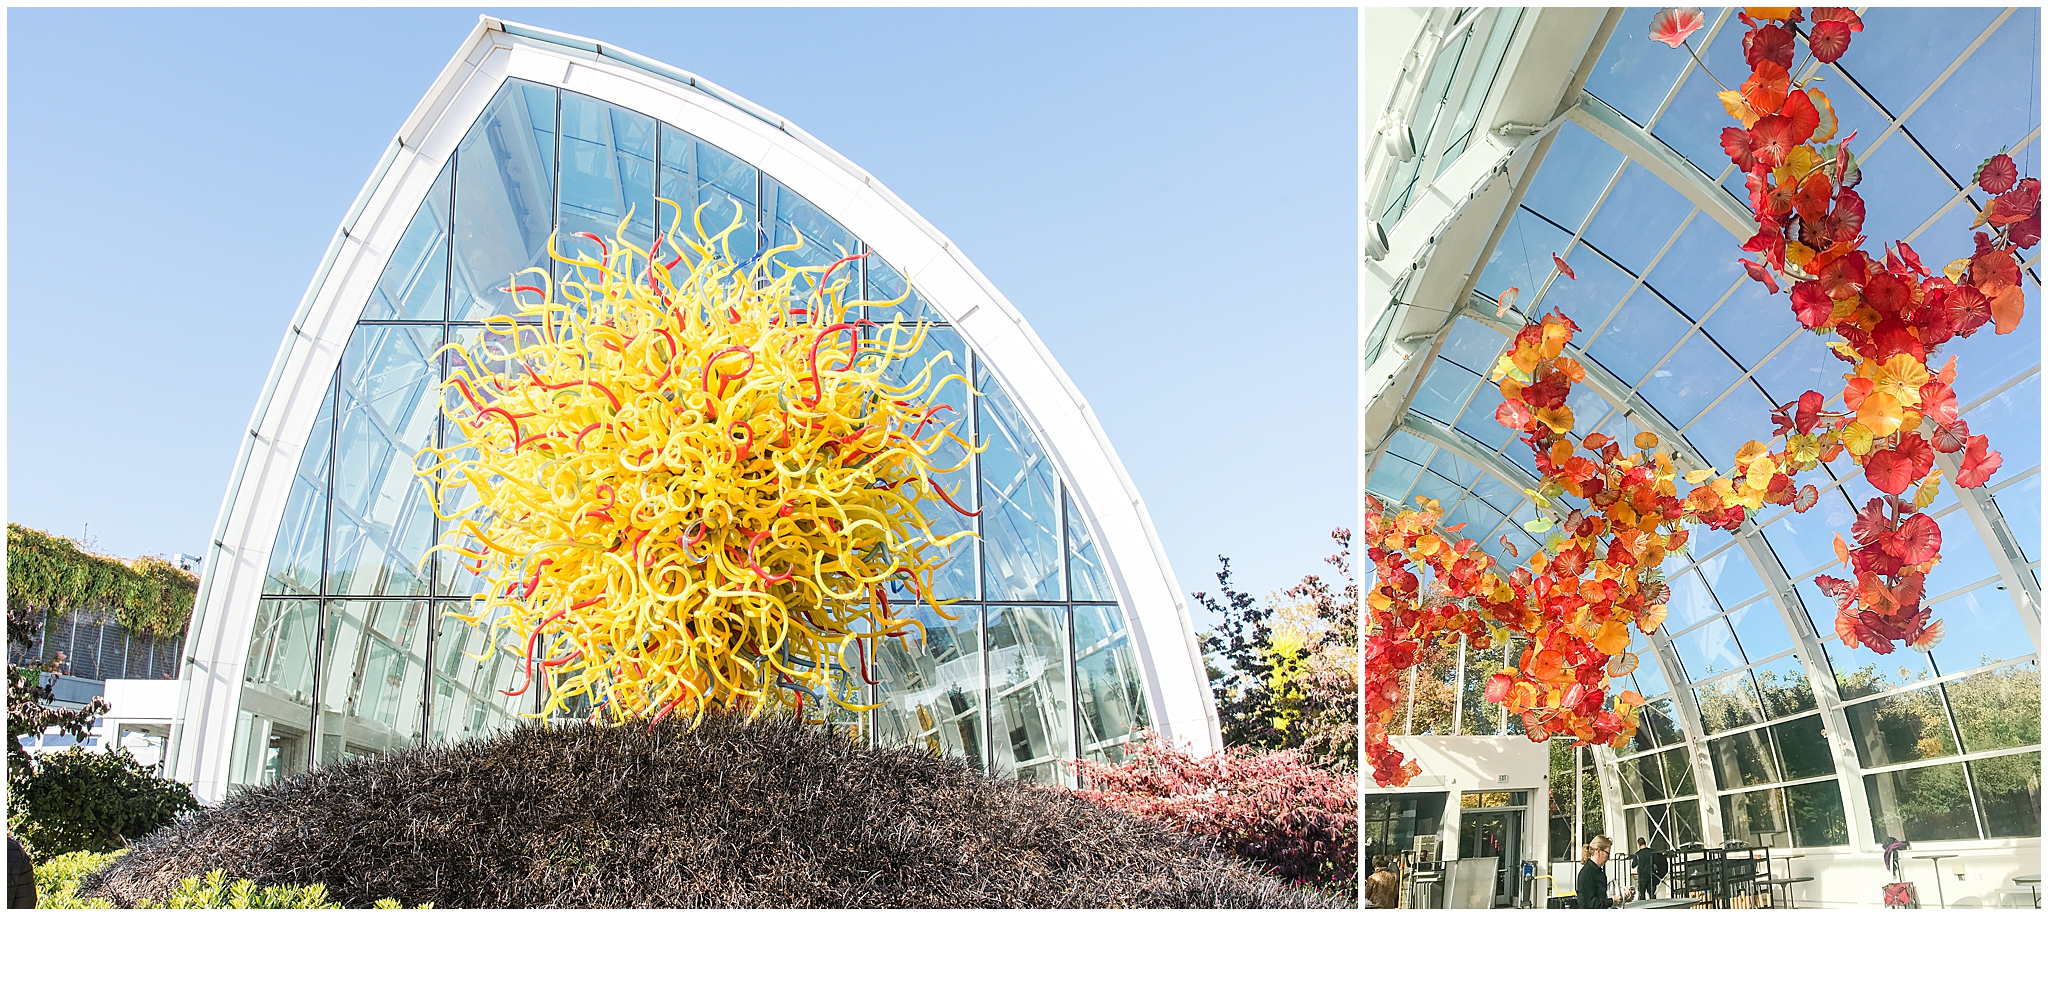 Chihuly Garden & Glass Exhibit, Seattle, WA